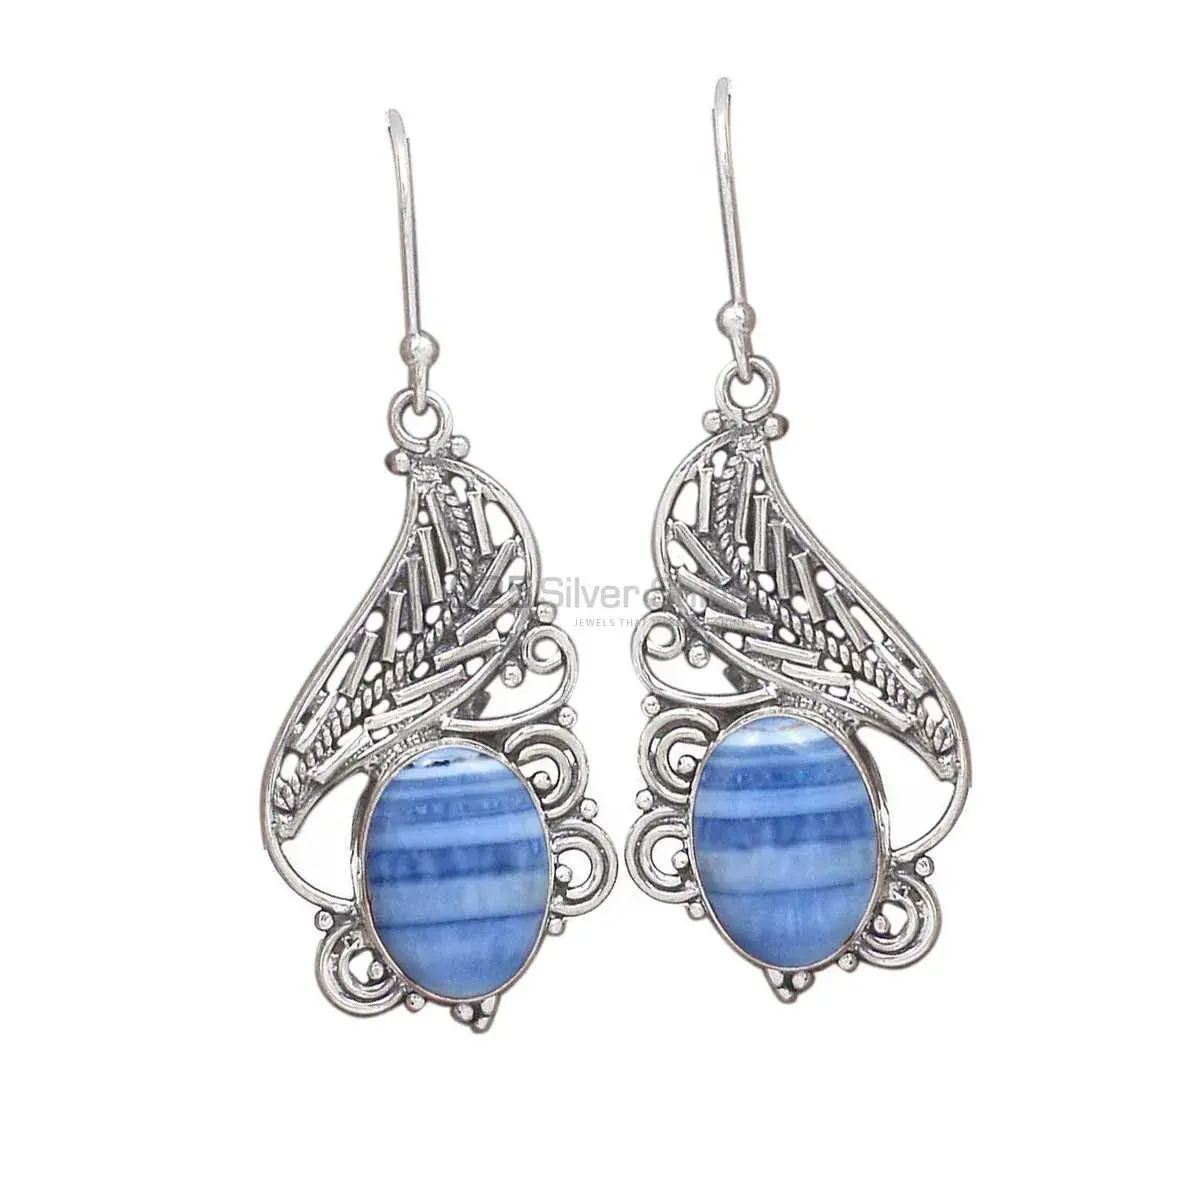 Unique 925 Sterling Silver Earrings In Blue Lace Agate Gemstone Jewelry 925SE2940